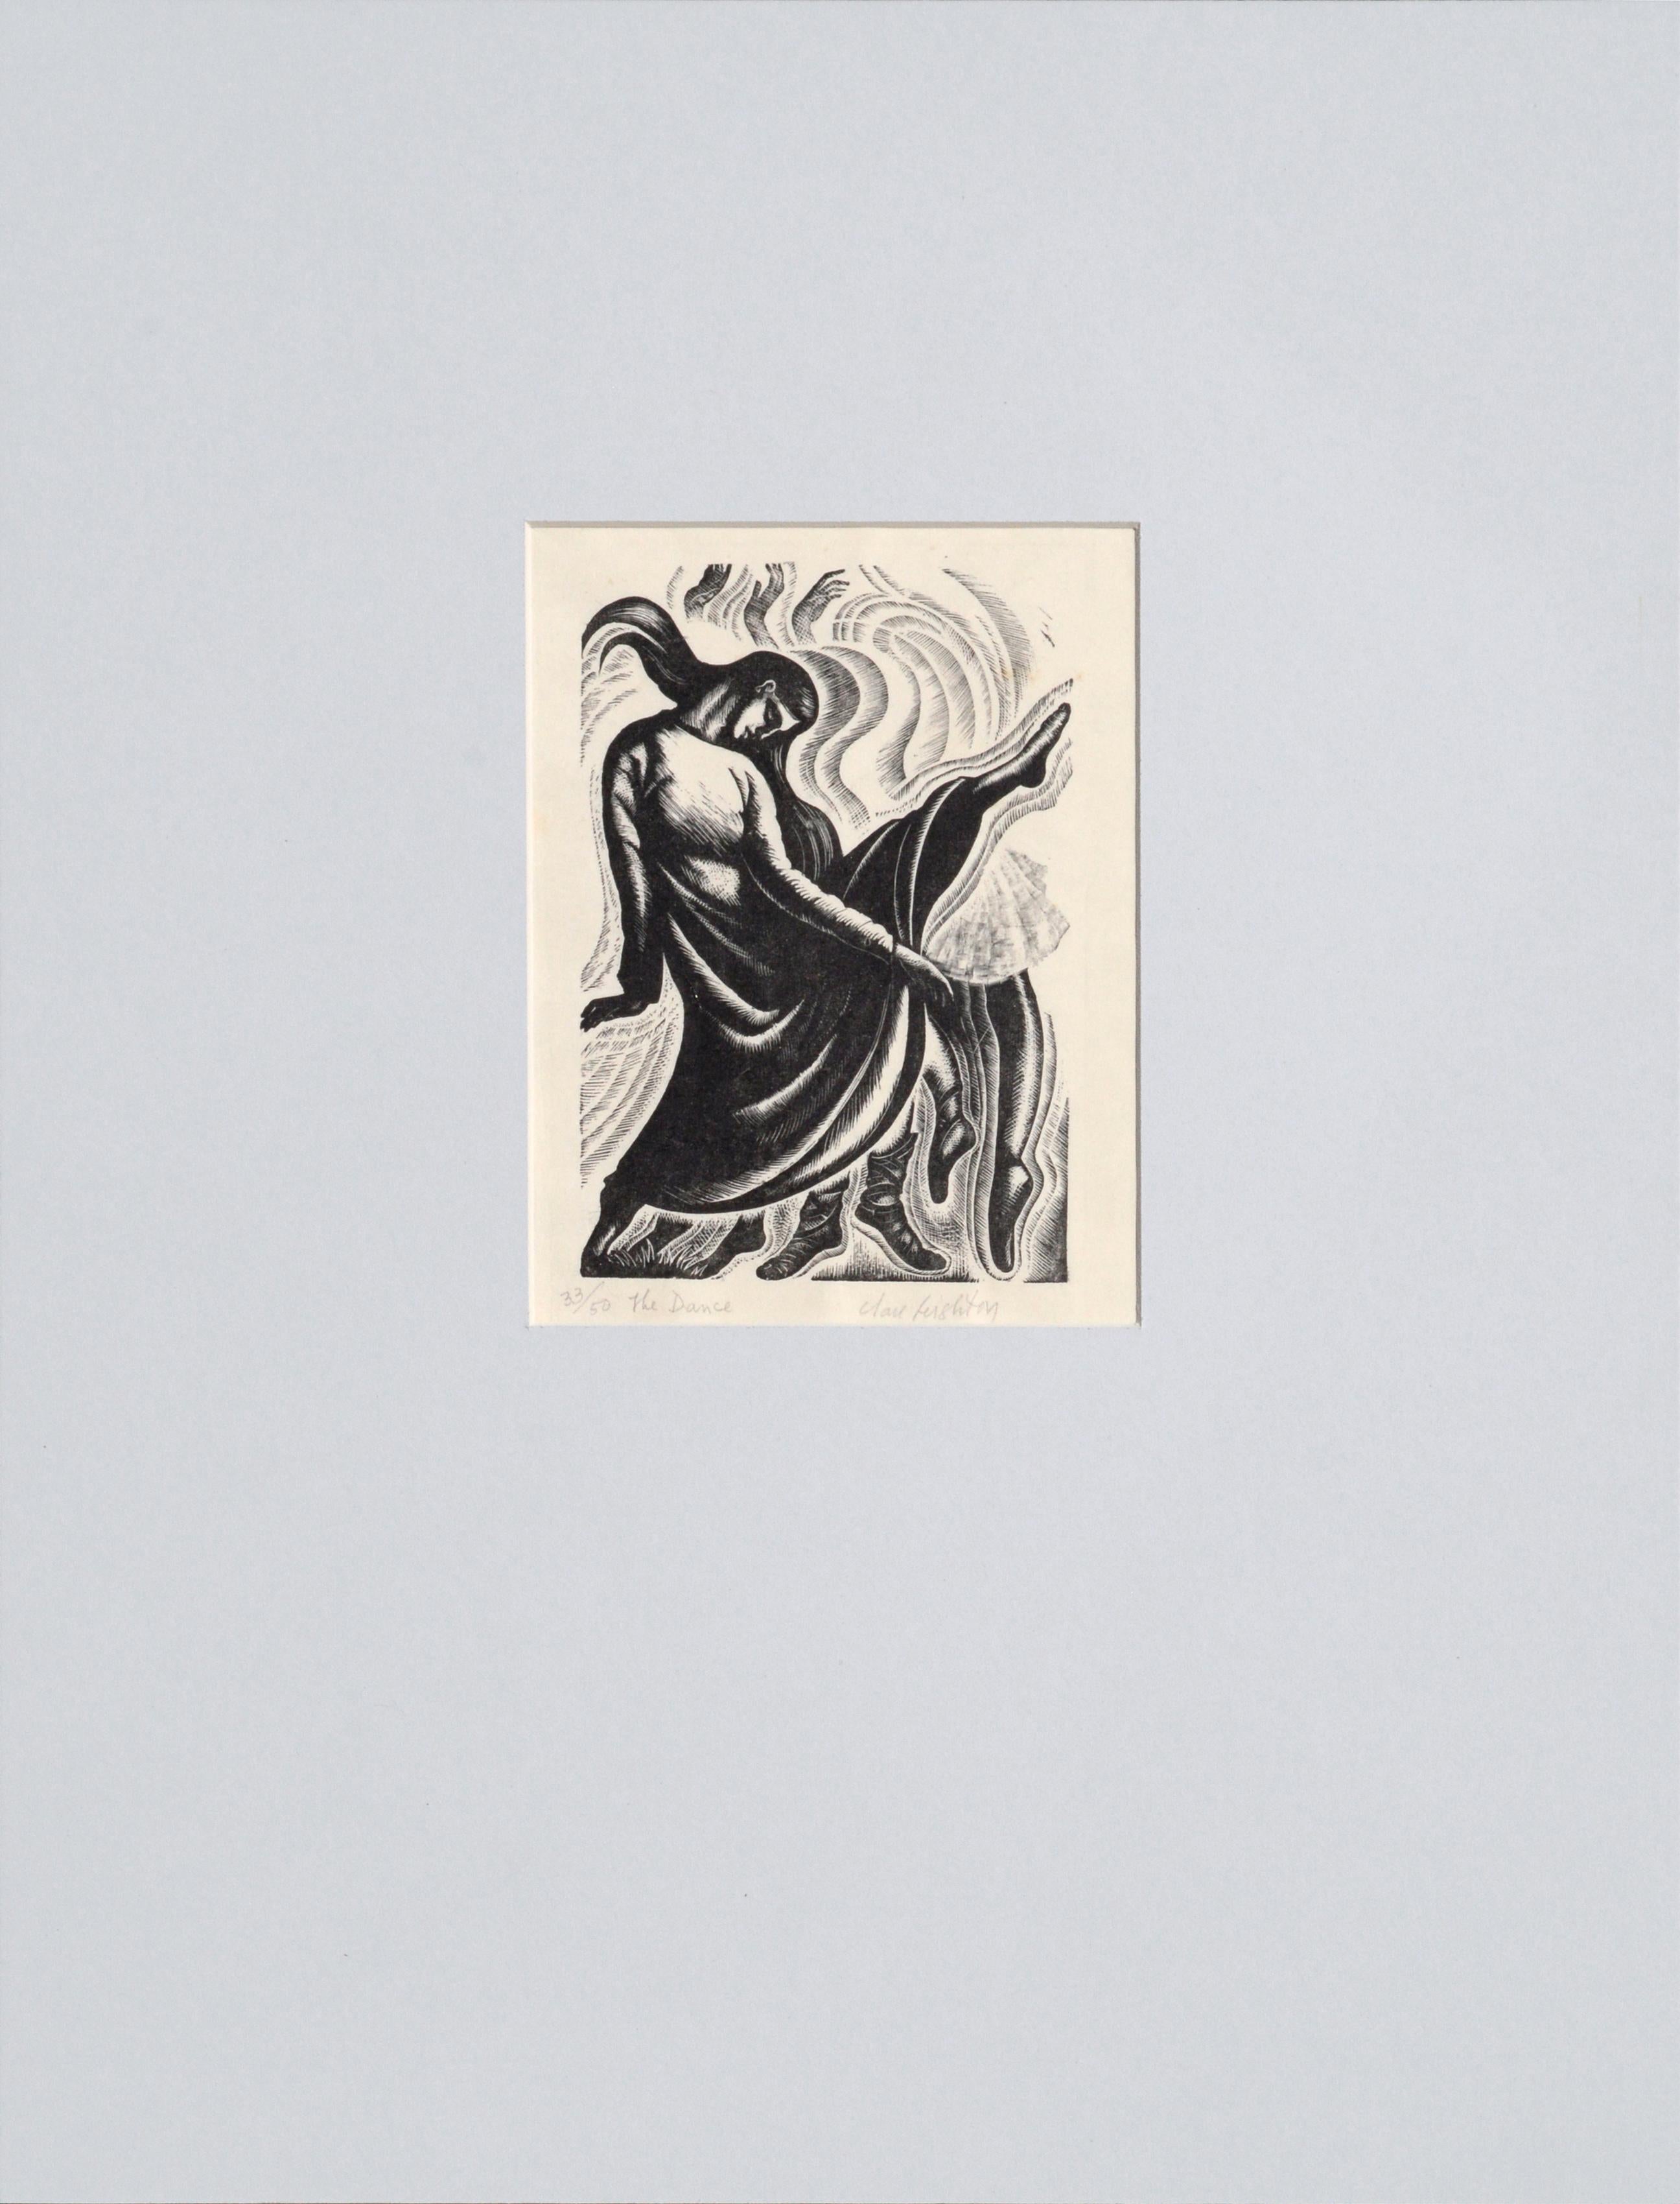 Clare Leighton Figurative Print - "The Dance" - Mid Century Modern Figurative Dancer Lithograph